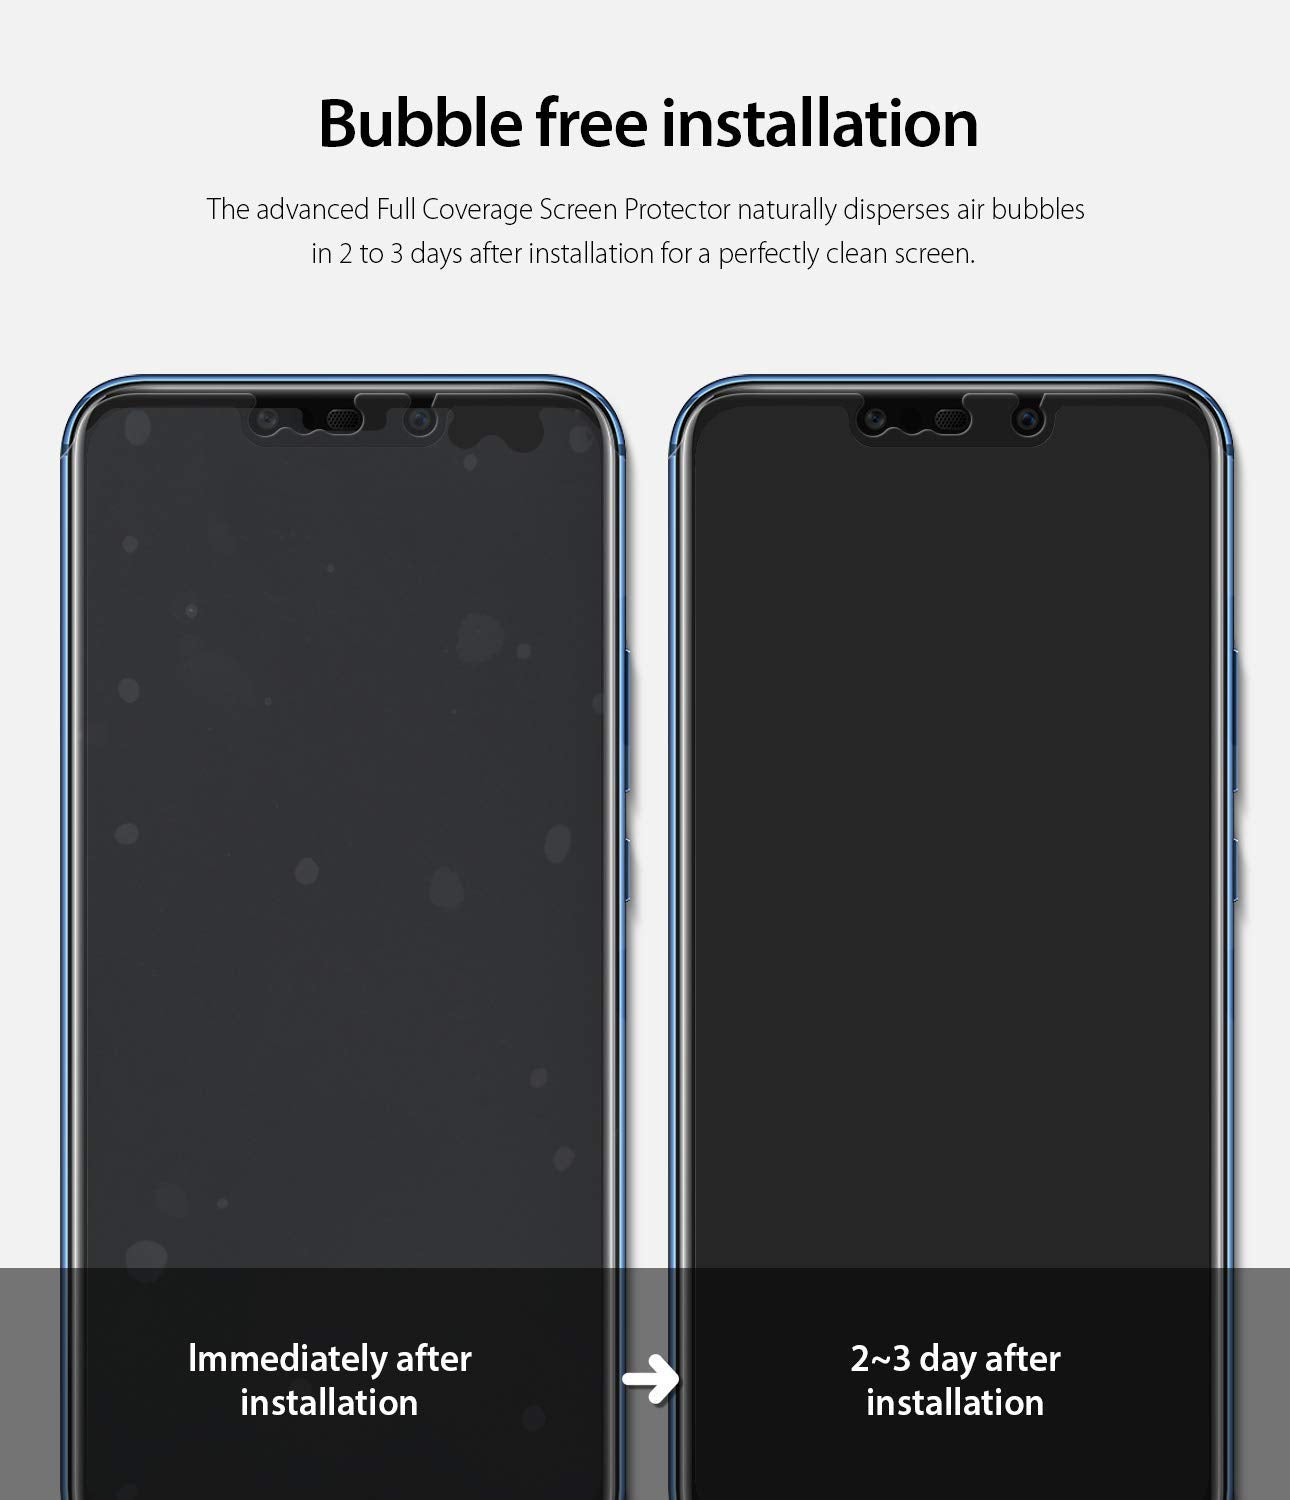 bubble free installation